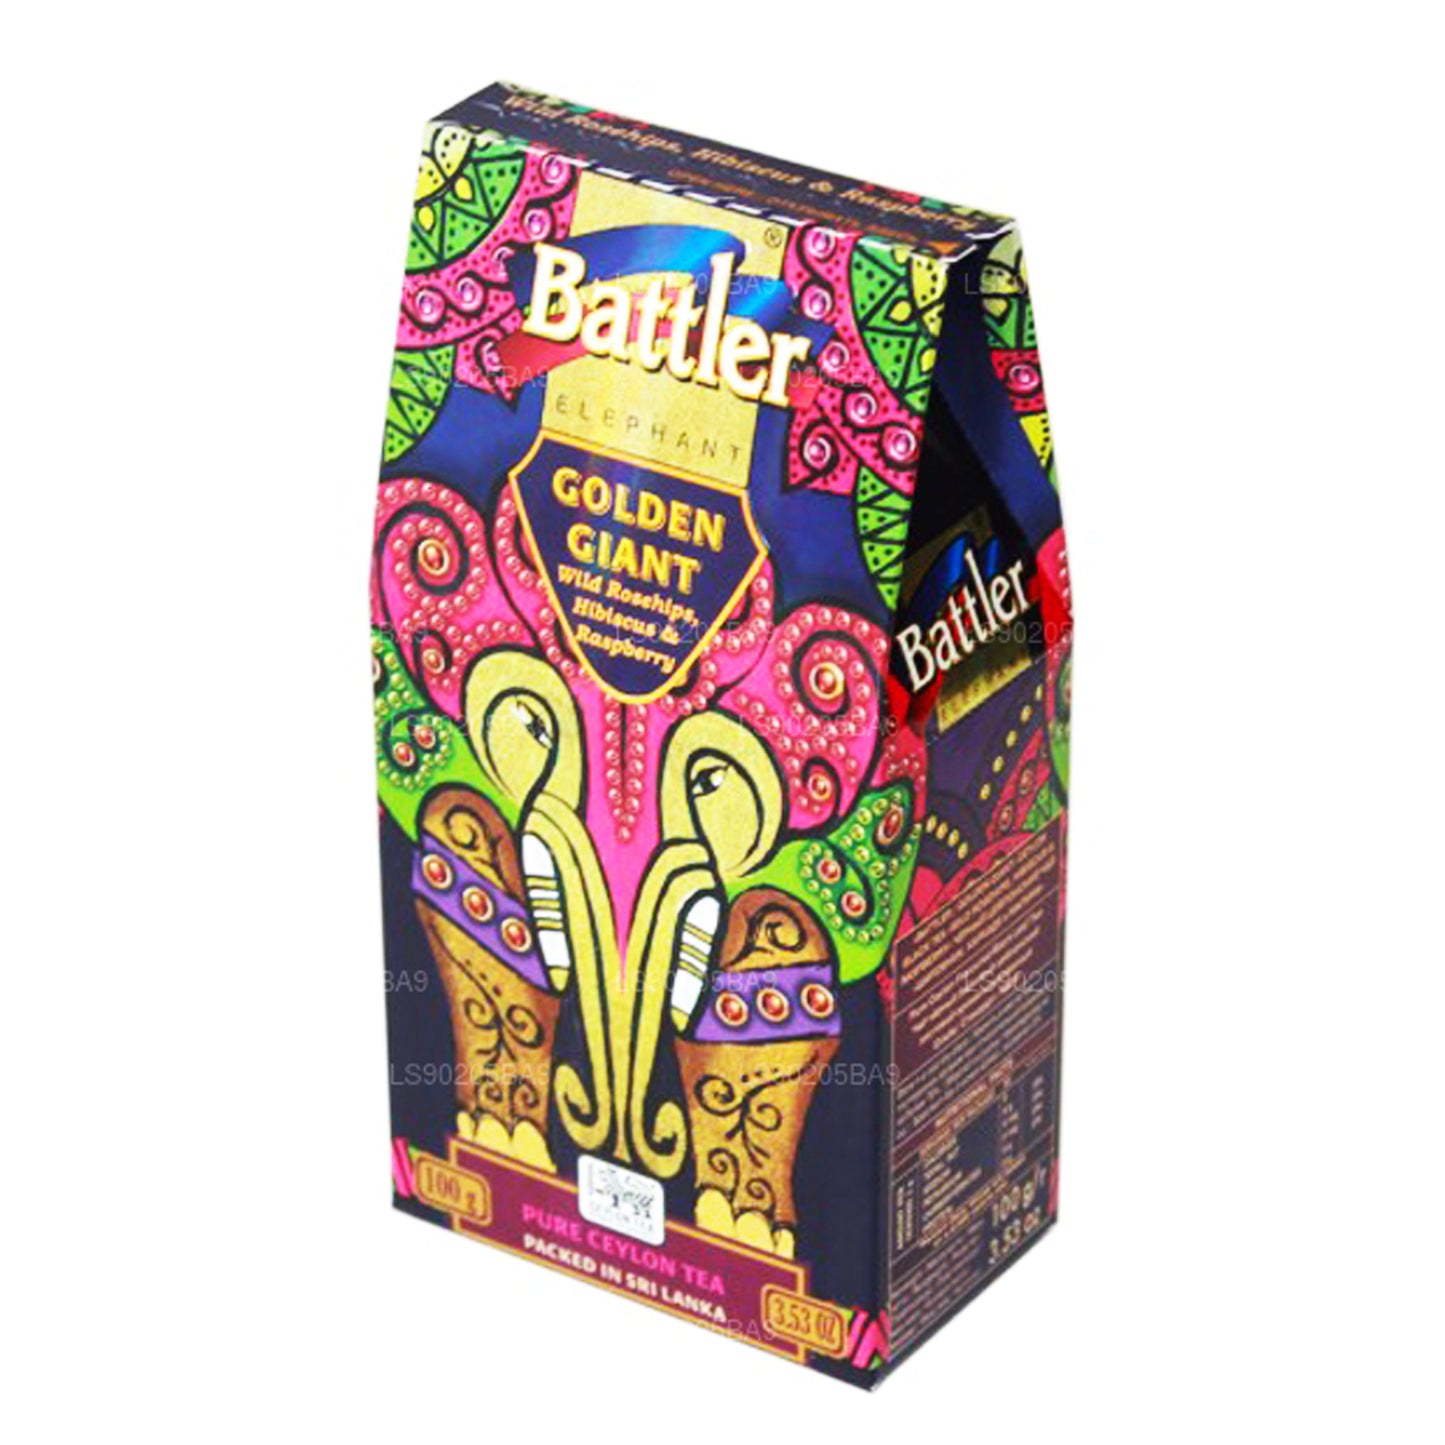 Battler Wild Hagebutte Hibiskus Himbeer Loser Tee (100 g) Kartonverpackung